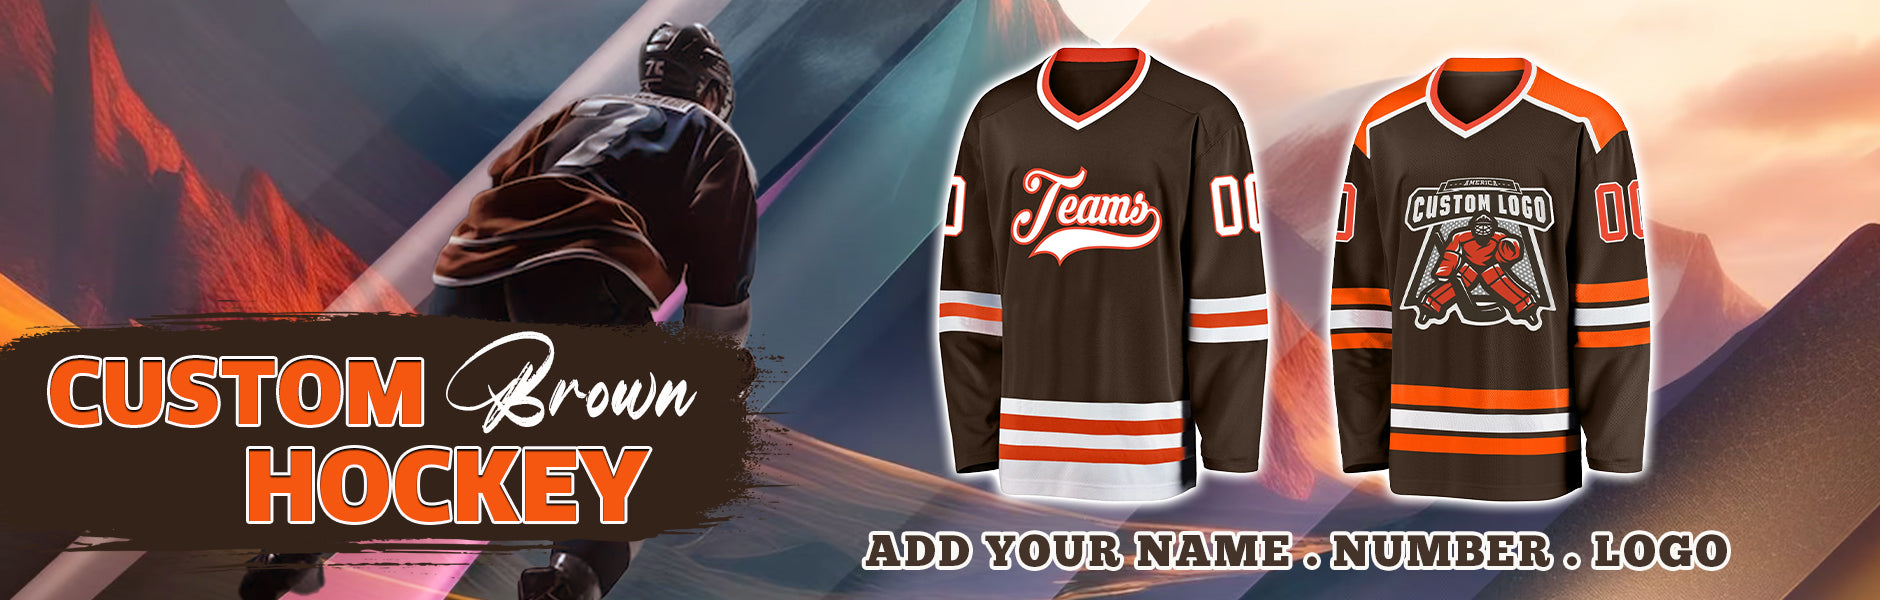 custom hockey brown jersey